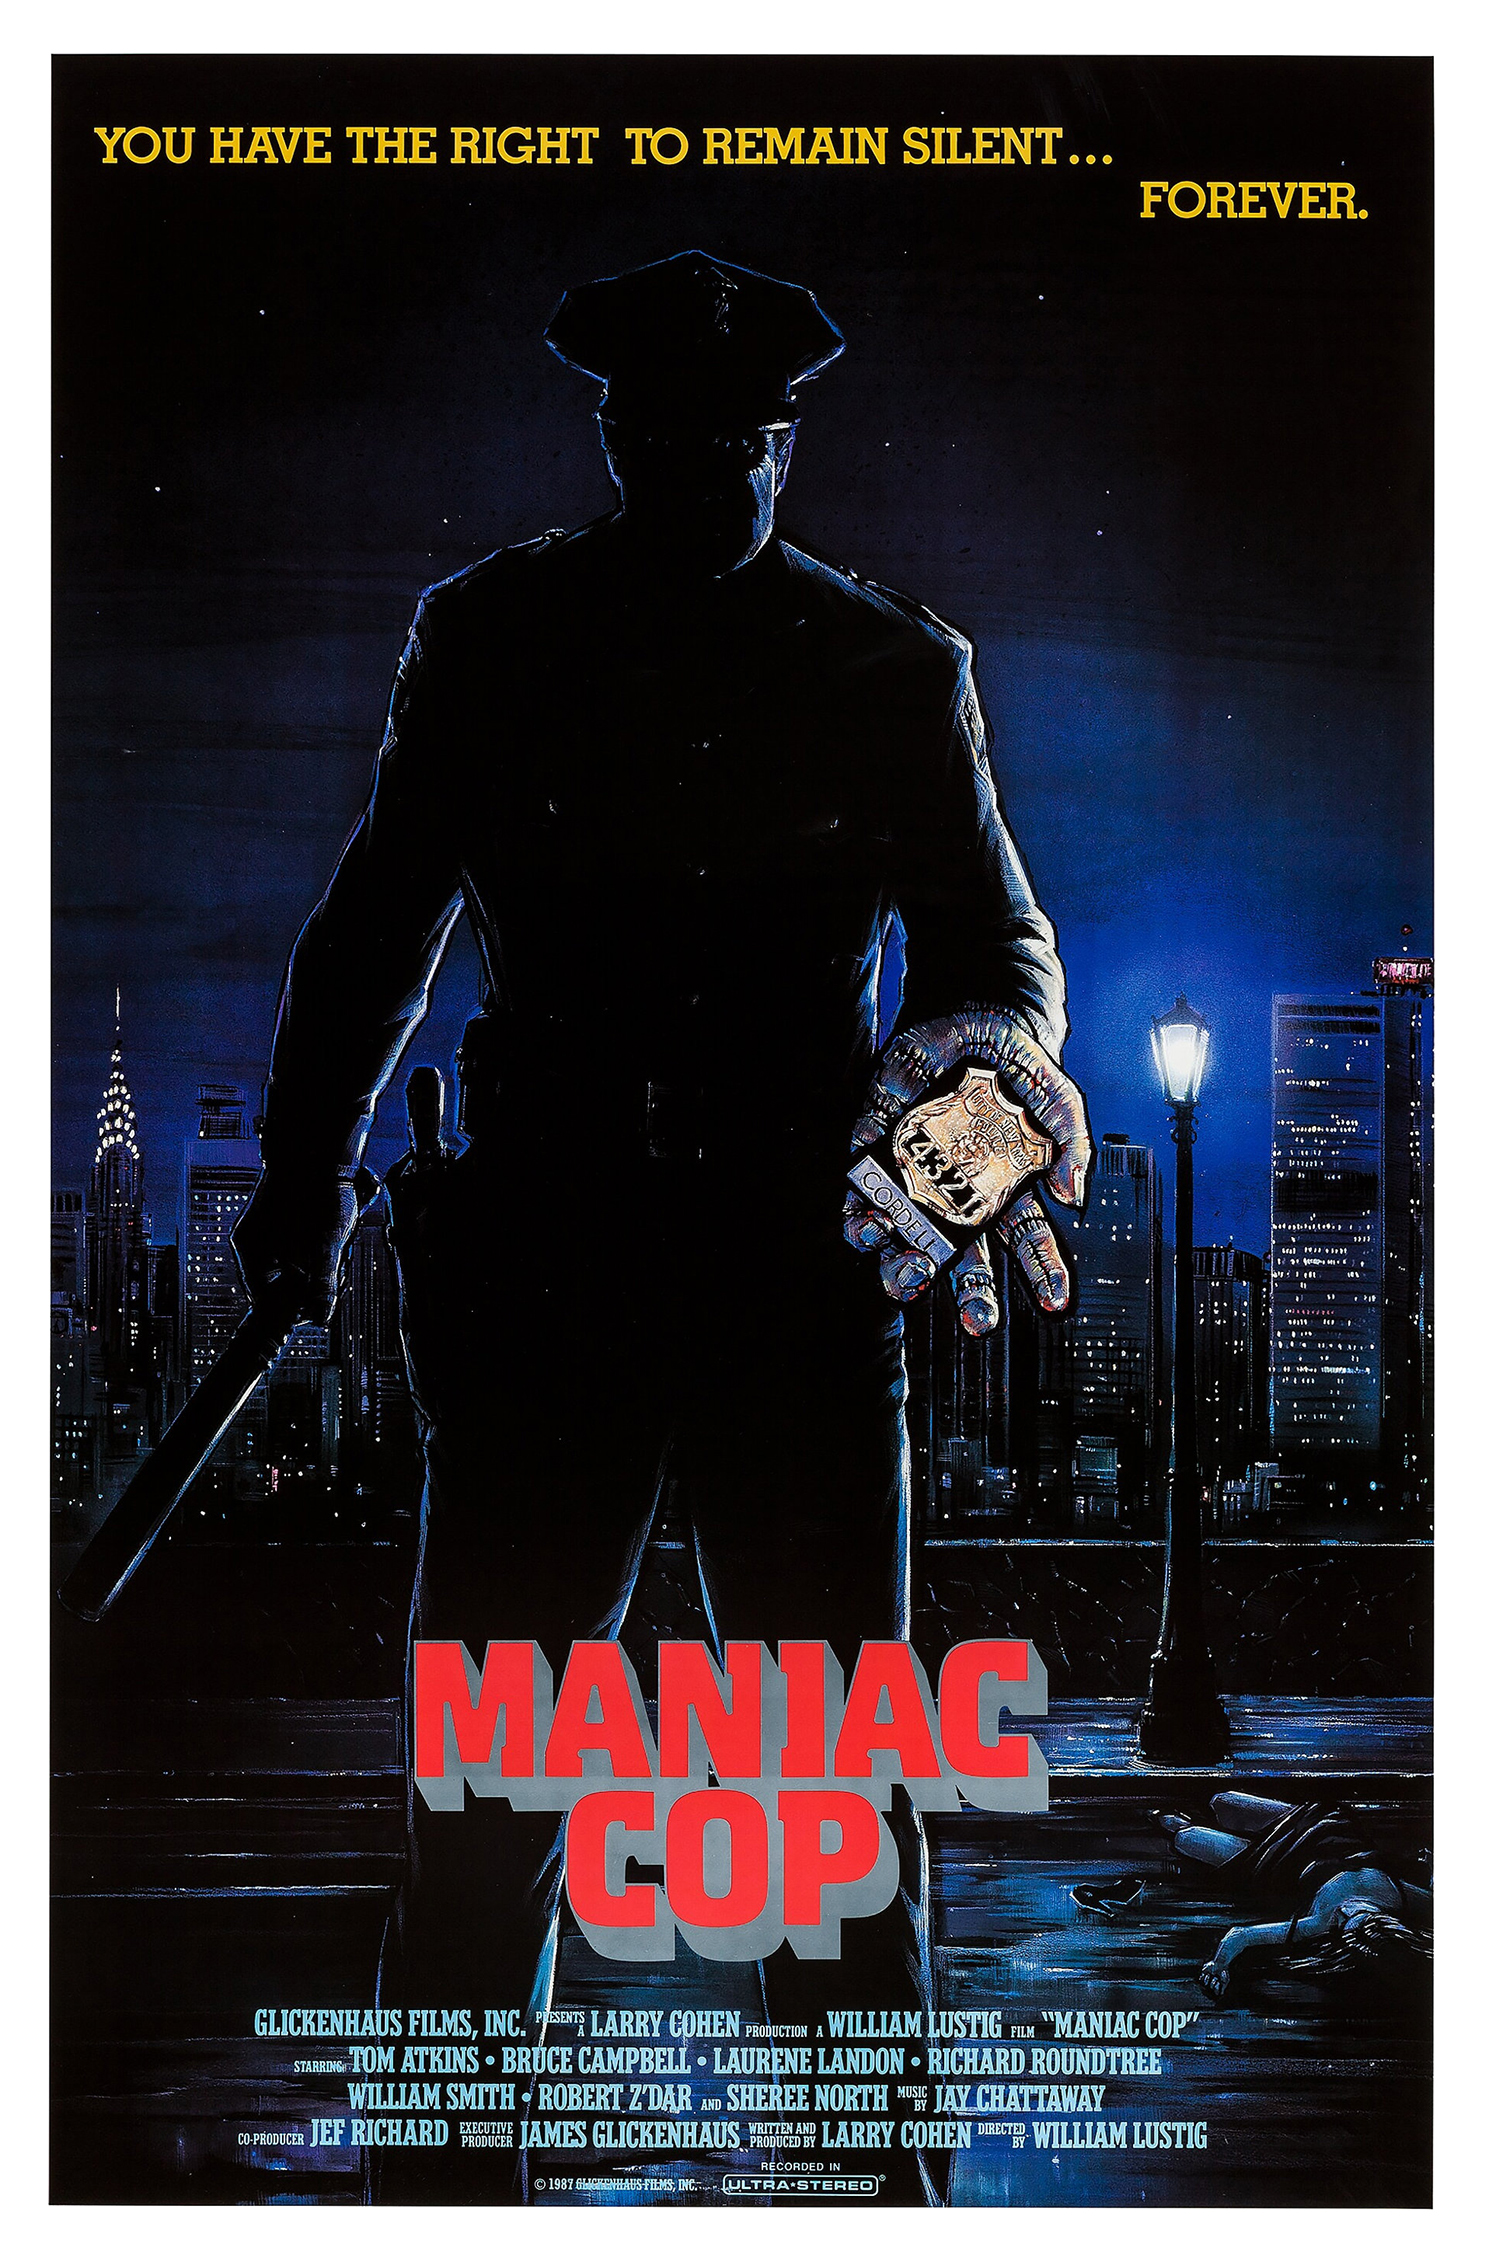 Maniac cop poster 01.jpg